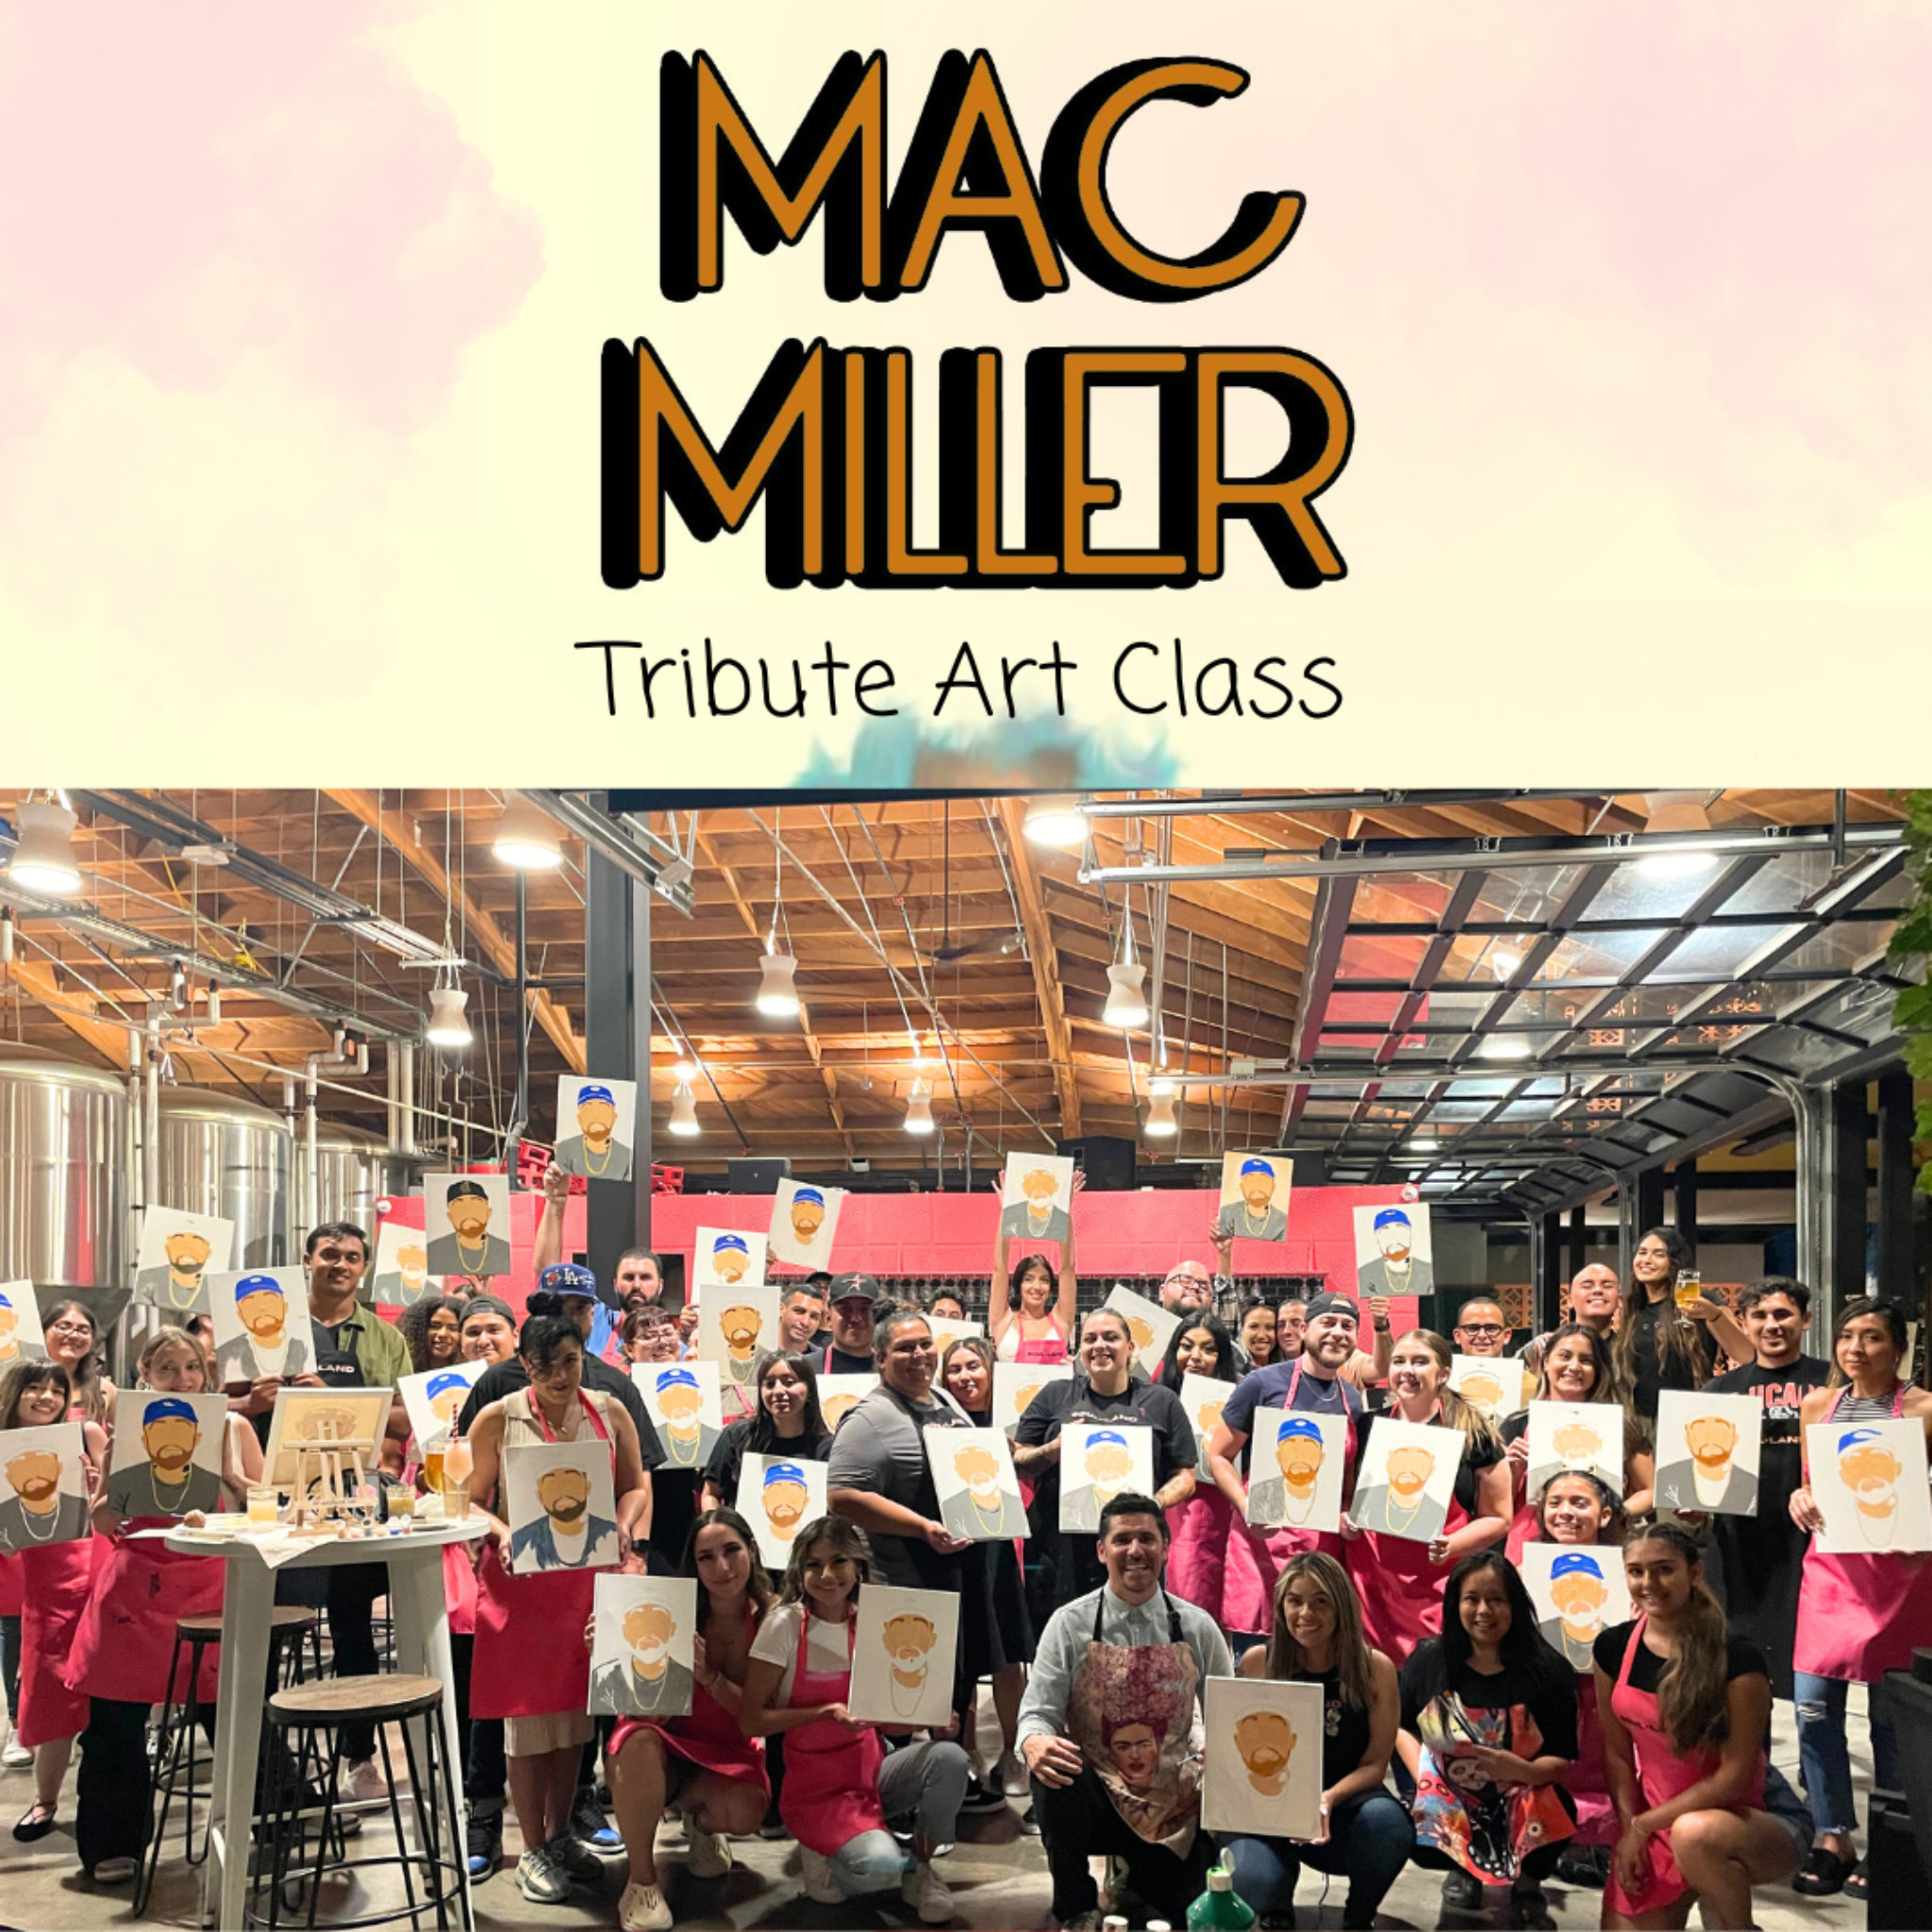 mac miller tribute artwork shop in villians brewery in anaheim, CA